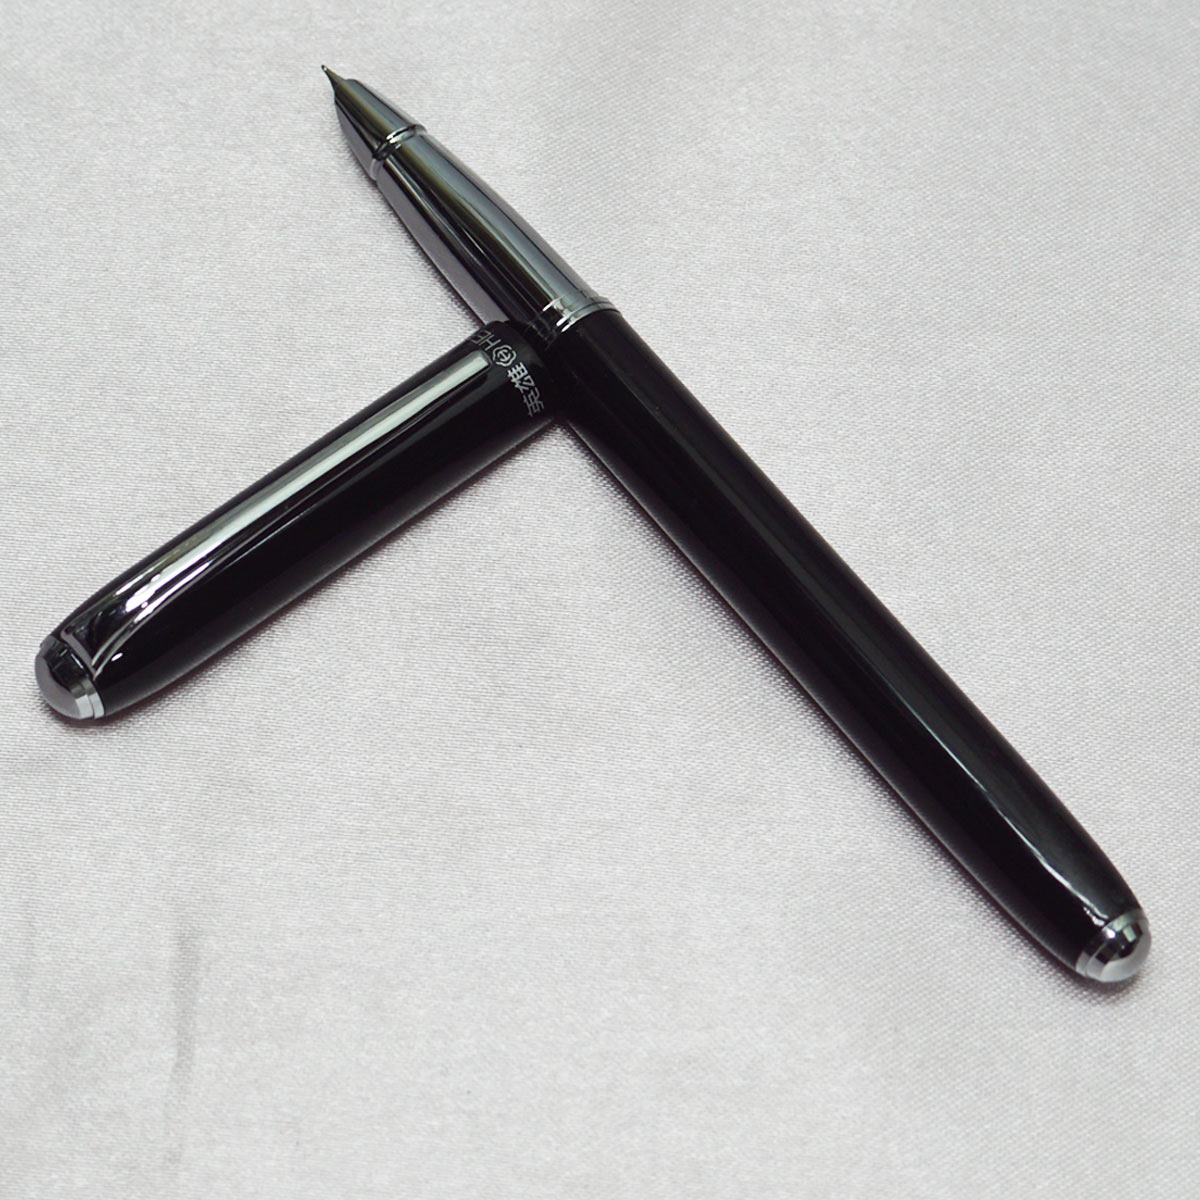 Hero 386 Black Color Body With Cap Silver Clip and Trims Fine Nib Converter Type Fountain Pen SKU 22494